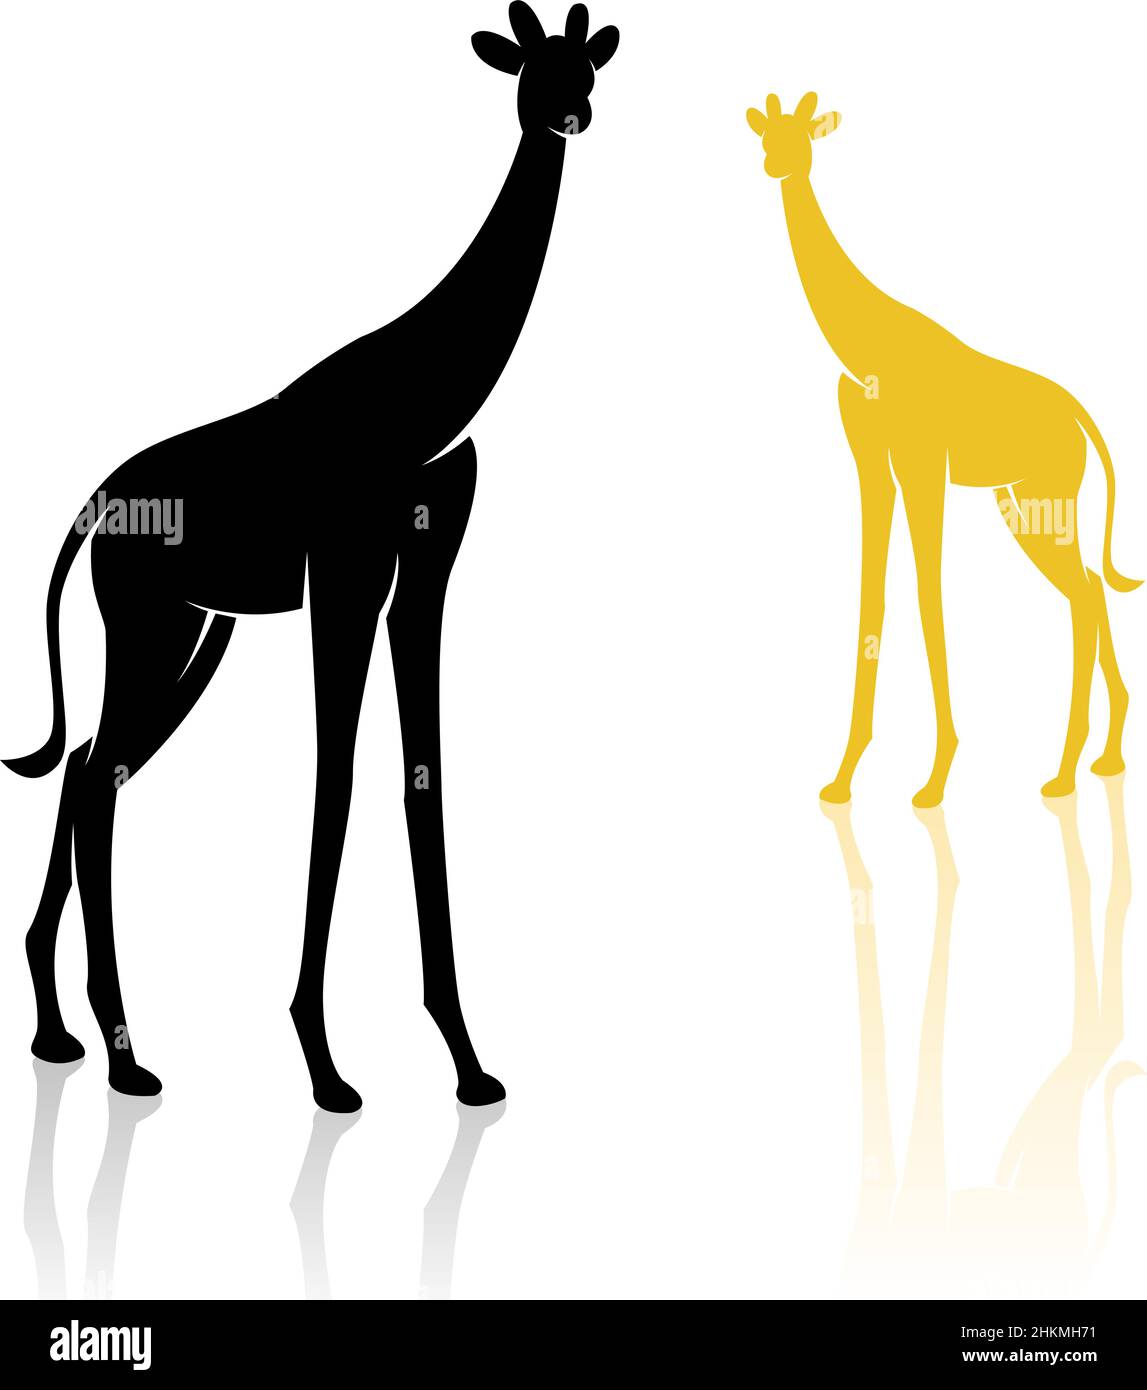 Vector image of giraffe on a white background. Easy editable layered vector illustration. Stock Vector